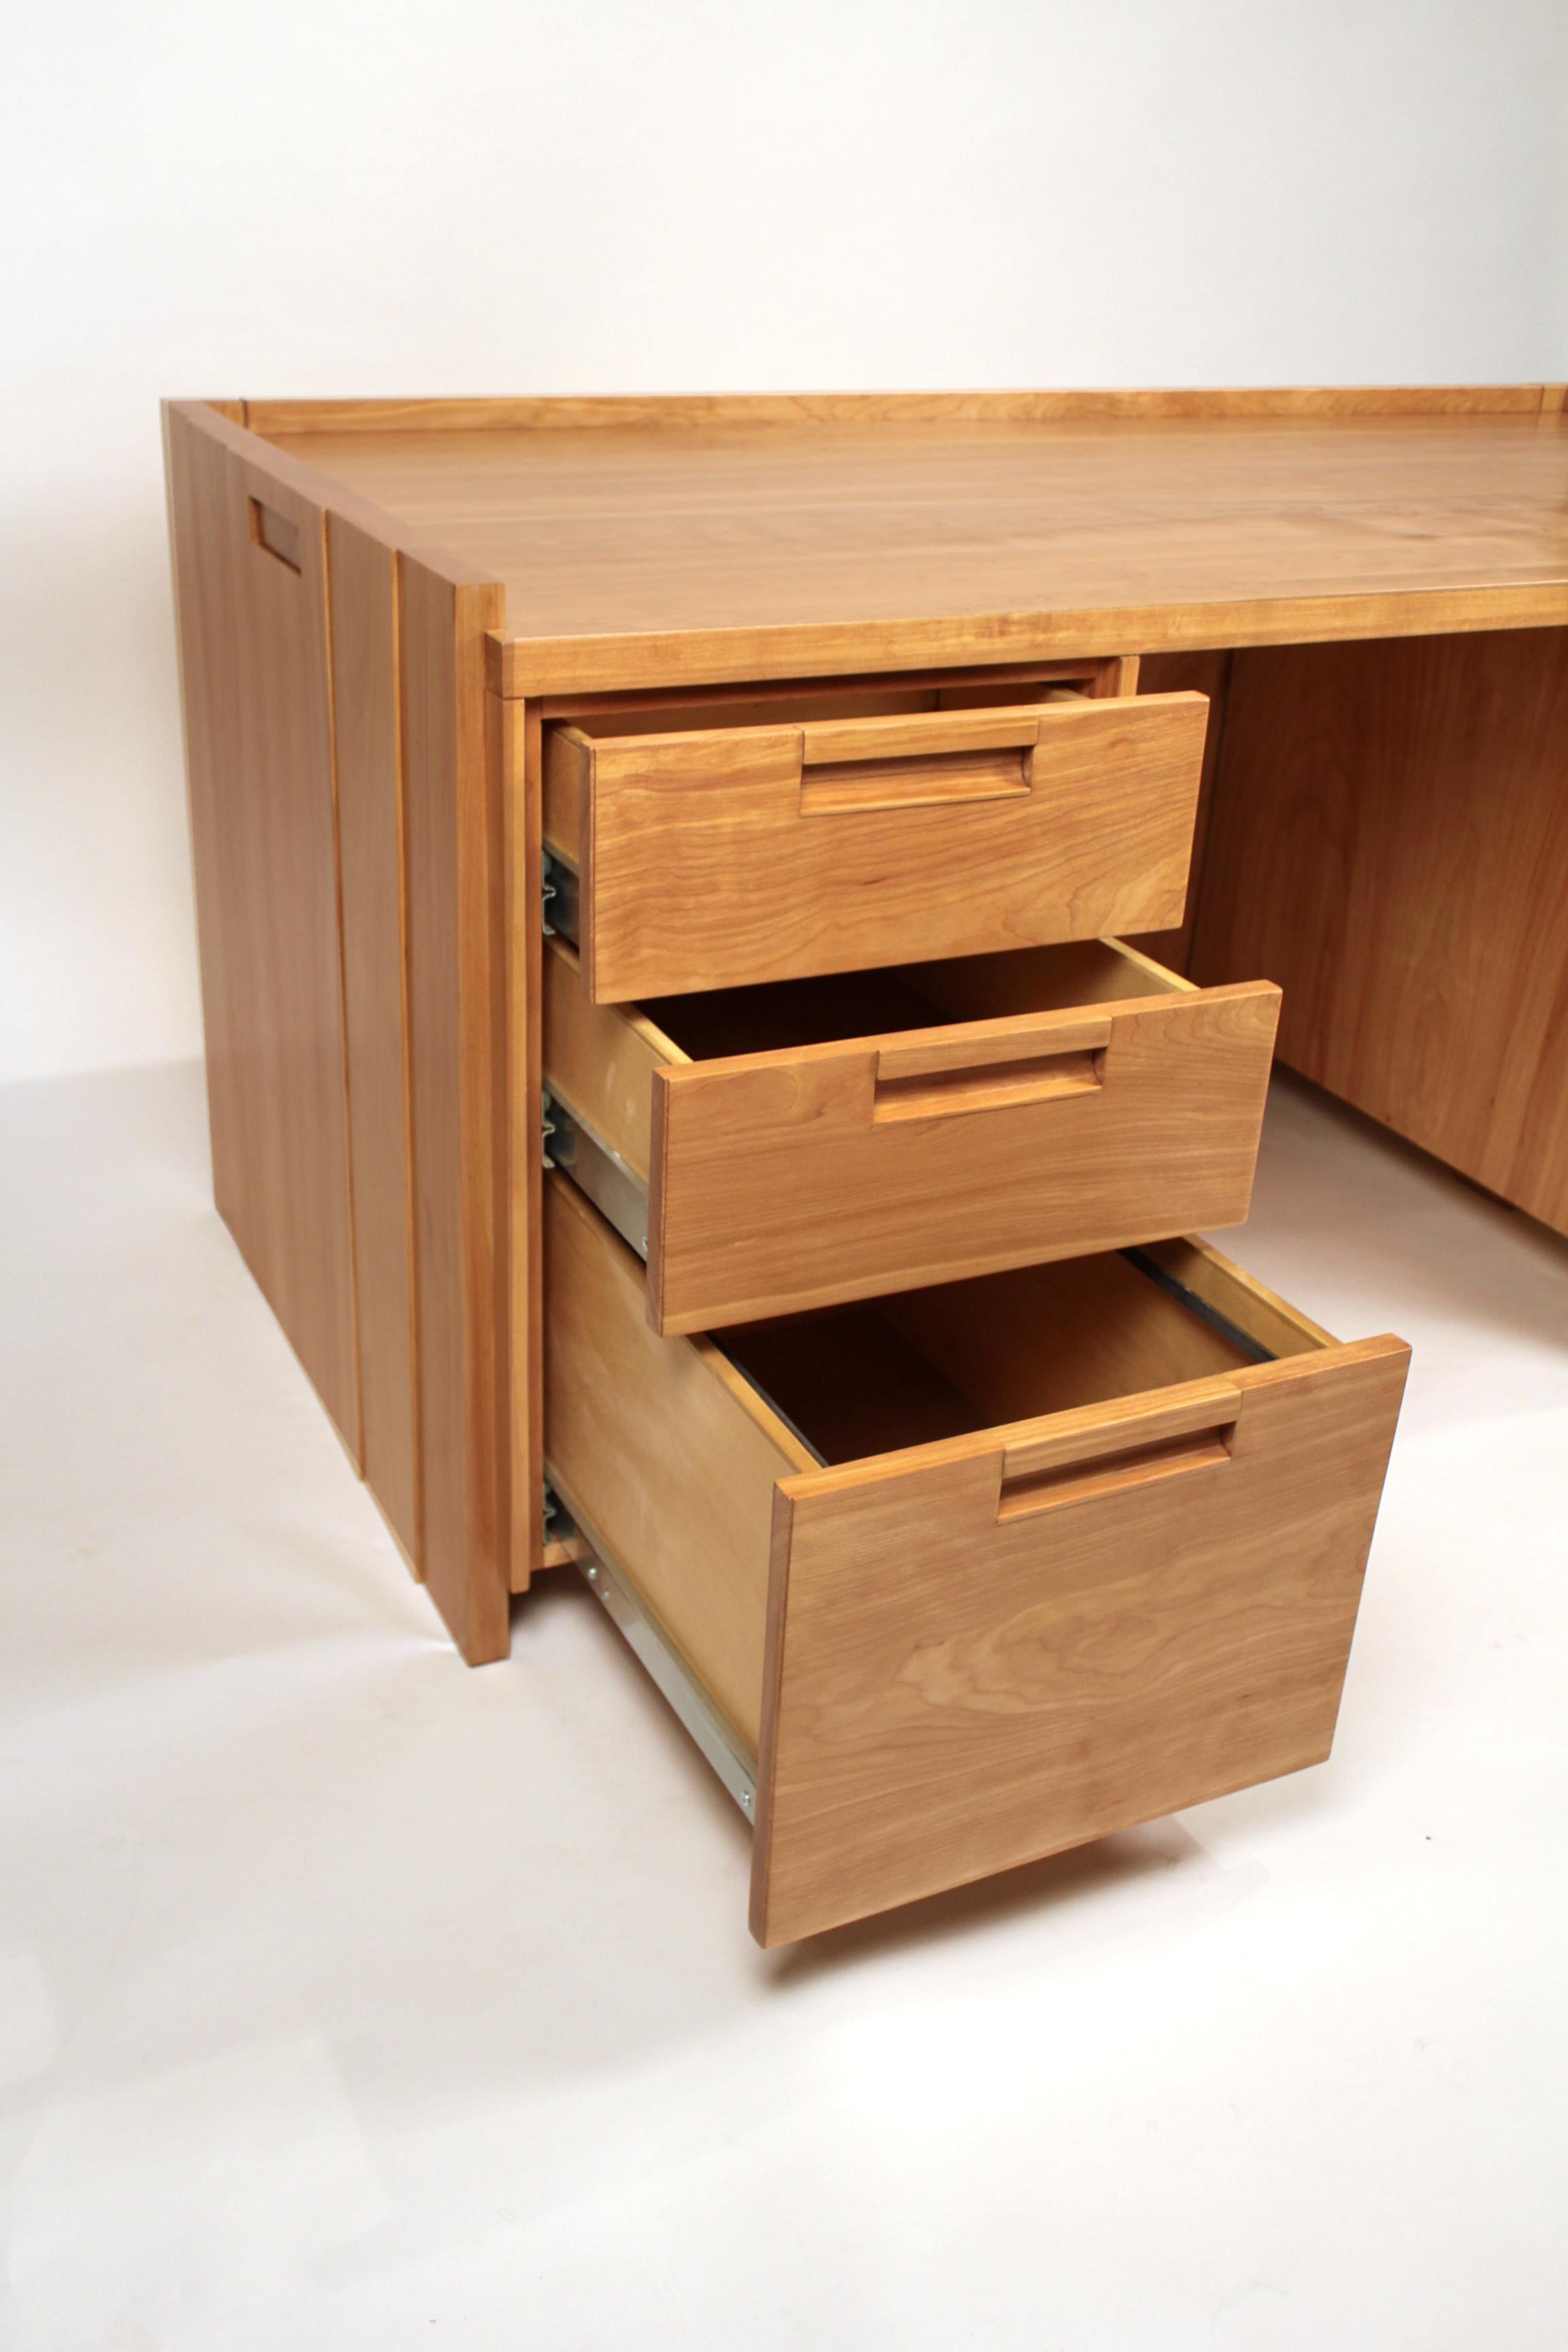 20th Century Custom Commissioned Solid Wood Desk by California Studio Craftsman John Kapel